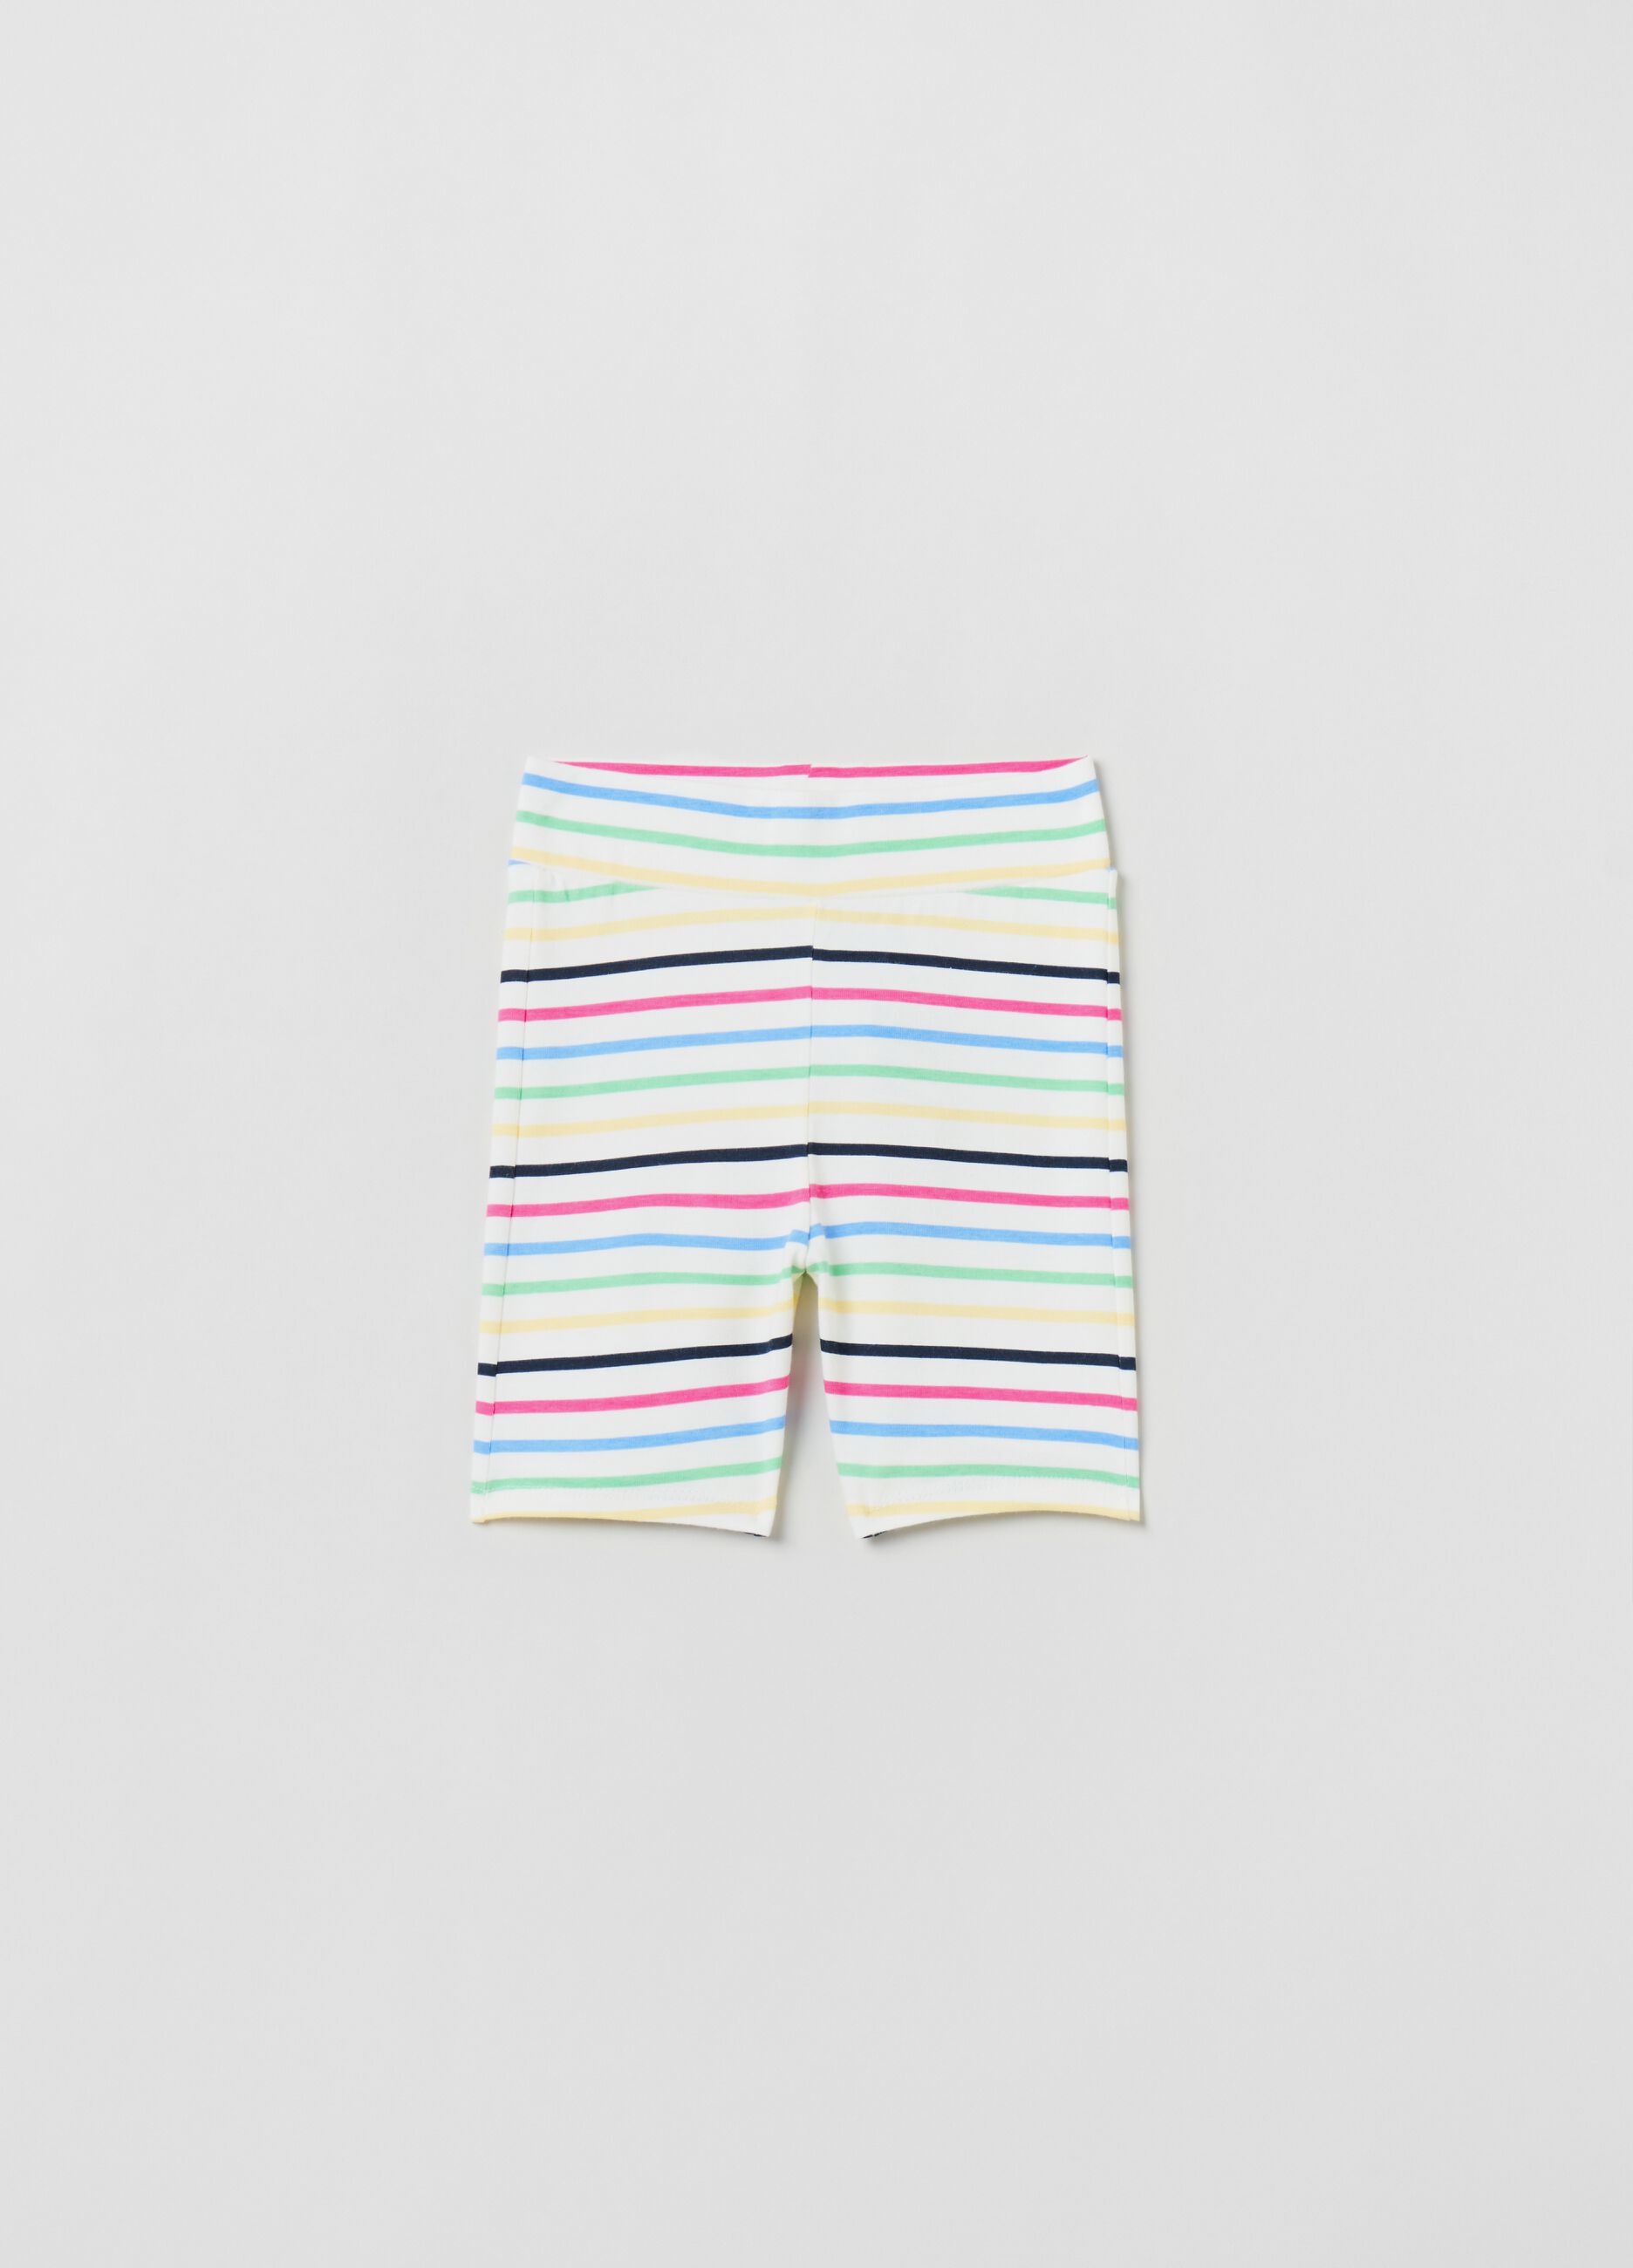 Striped patterned shorts